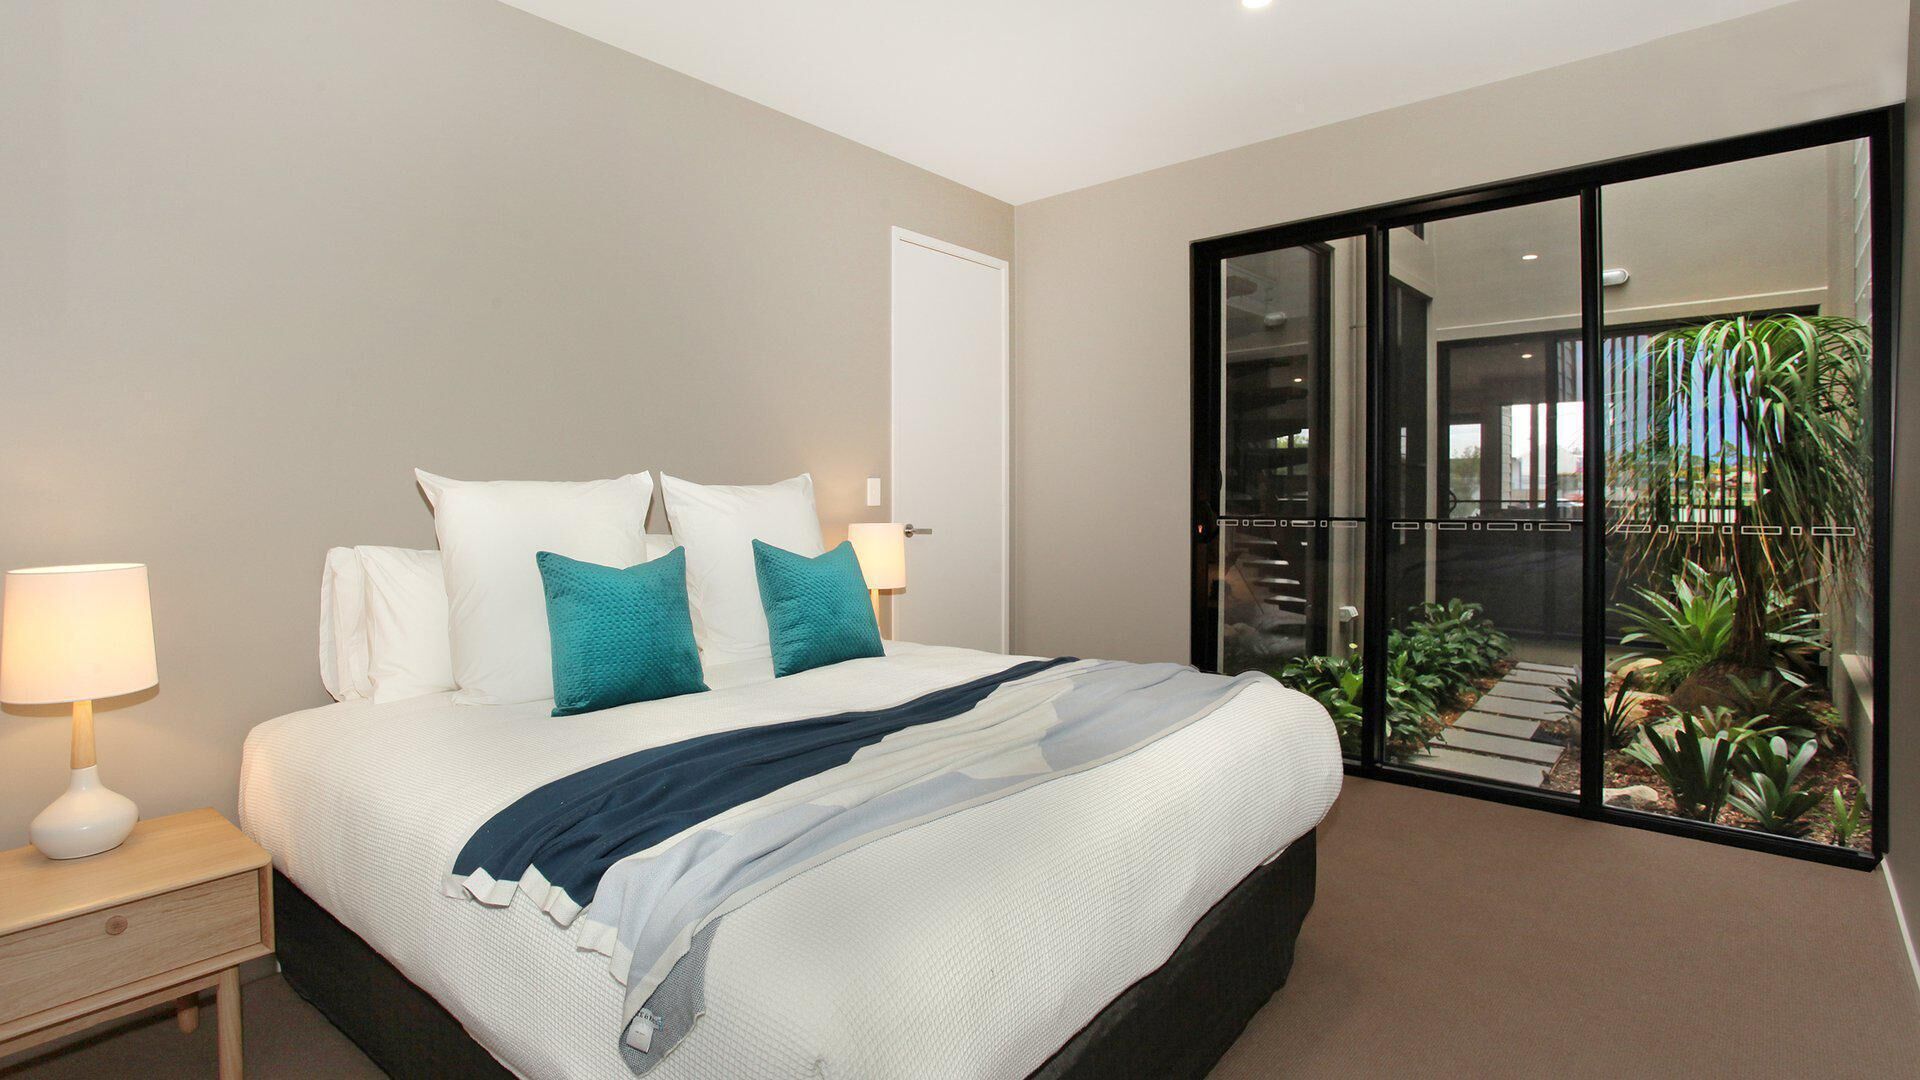 Culbara 23b - Modern 5 Bedroom Townhouse on Mooloolaba Canal with Pool + Pontoon + Aircon!